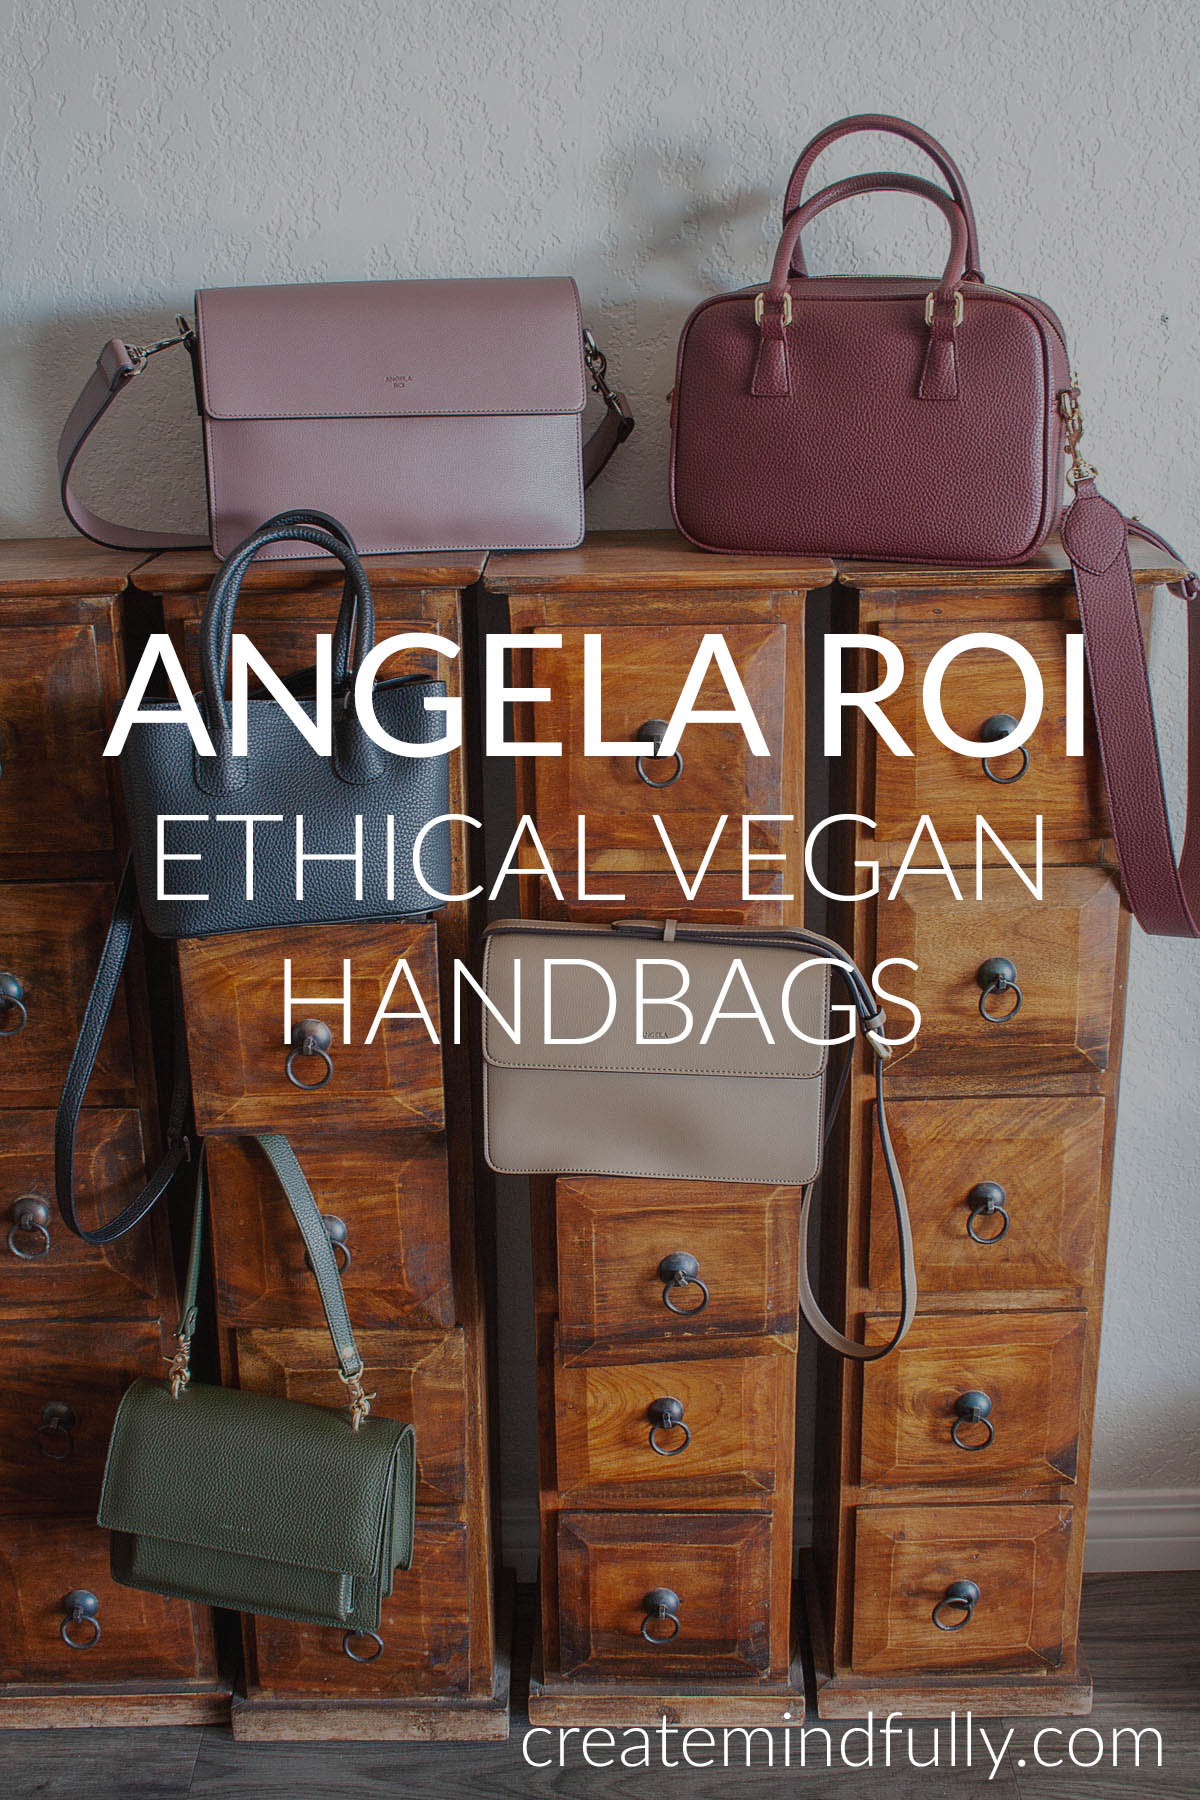 "Angela Roi ethical vegan handbags" written on photo with 5 purses.